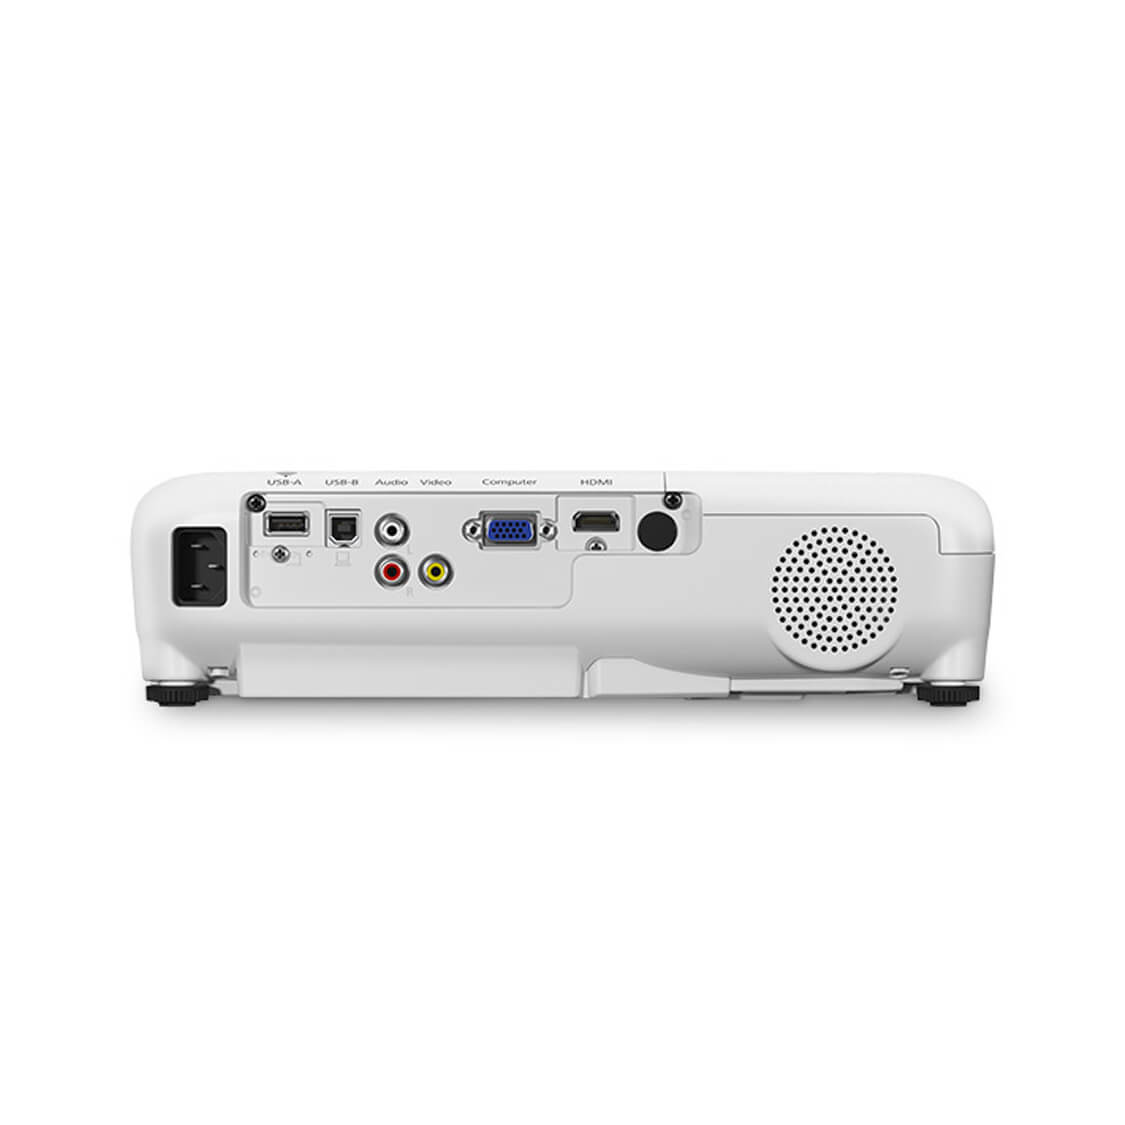 Epson VS350 XGA 3LCD Projector